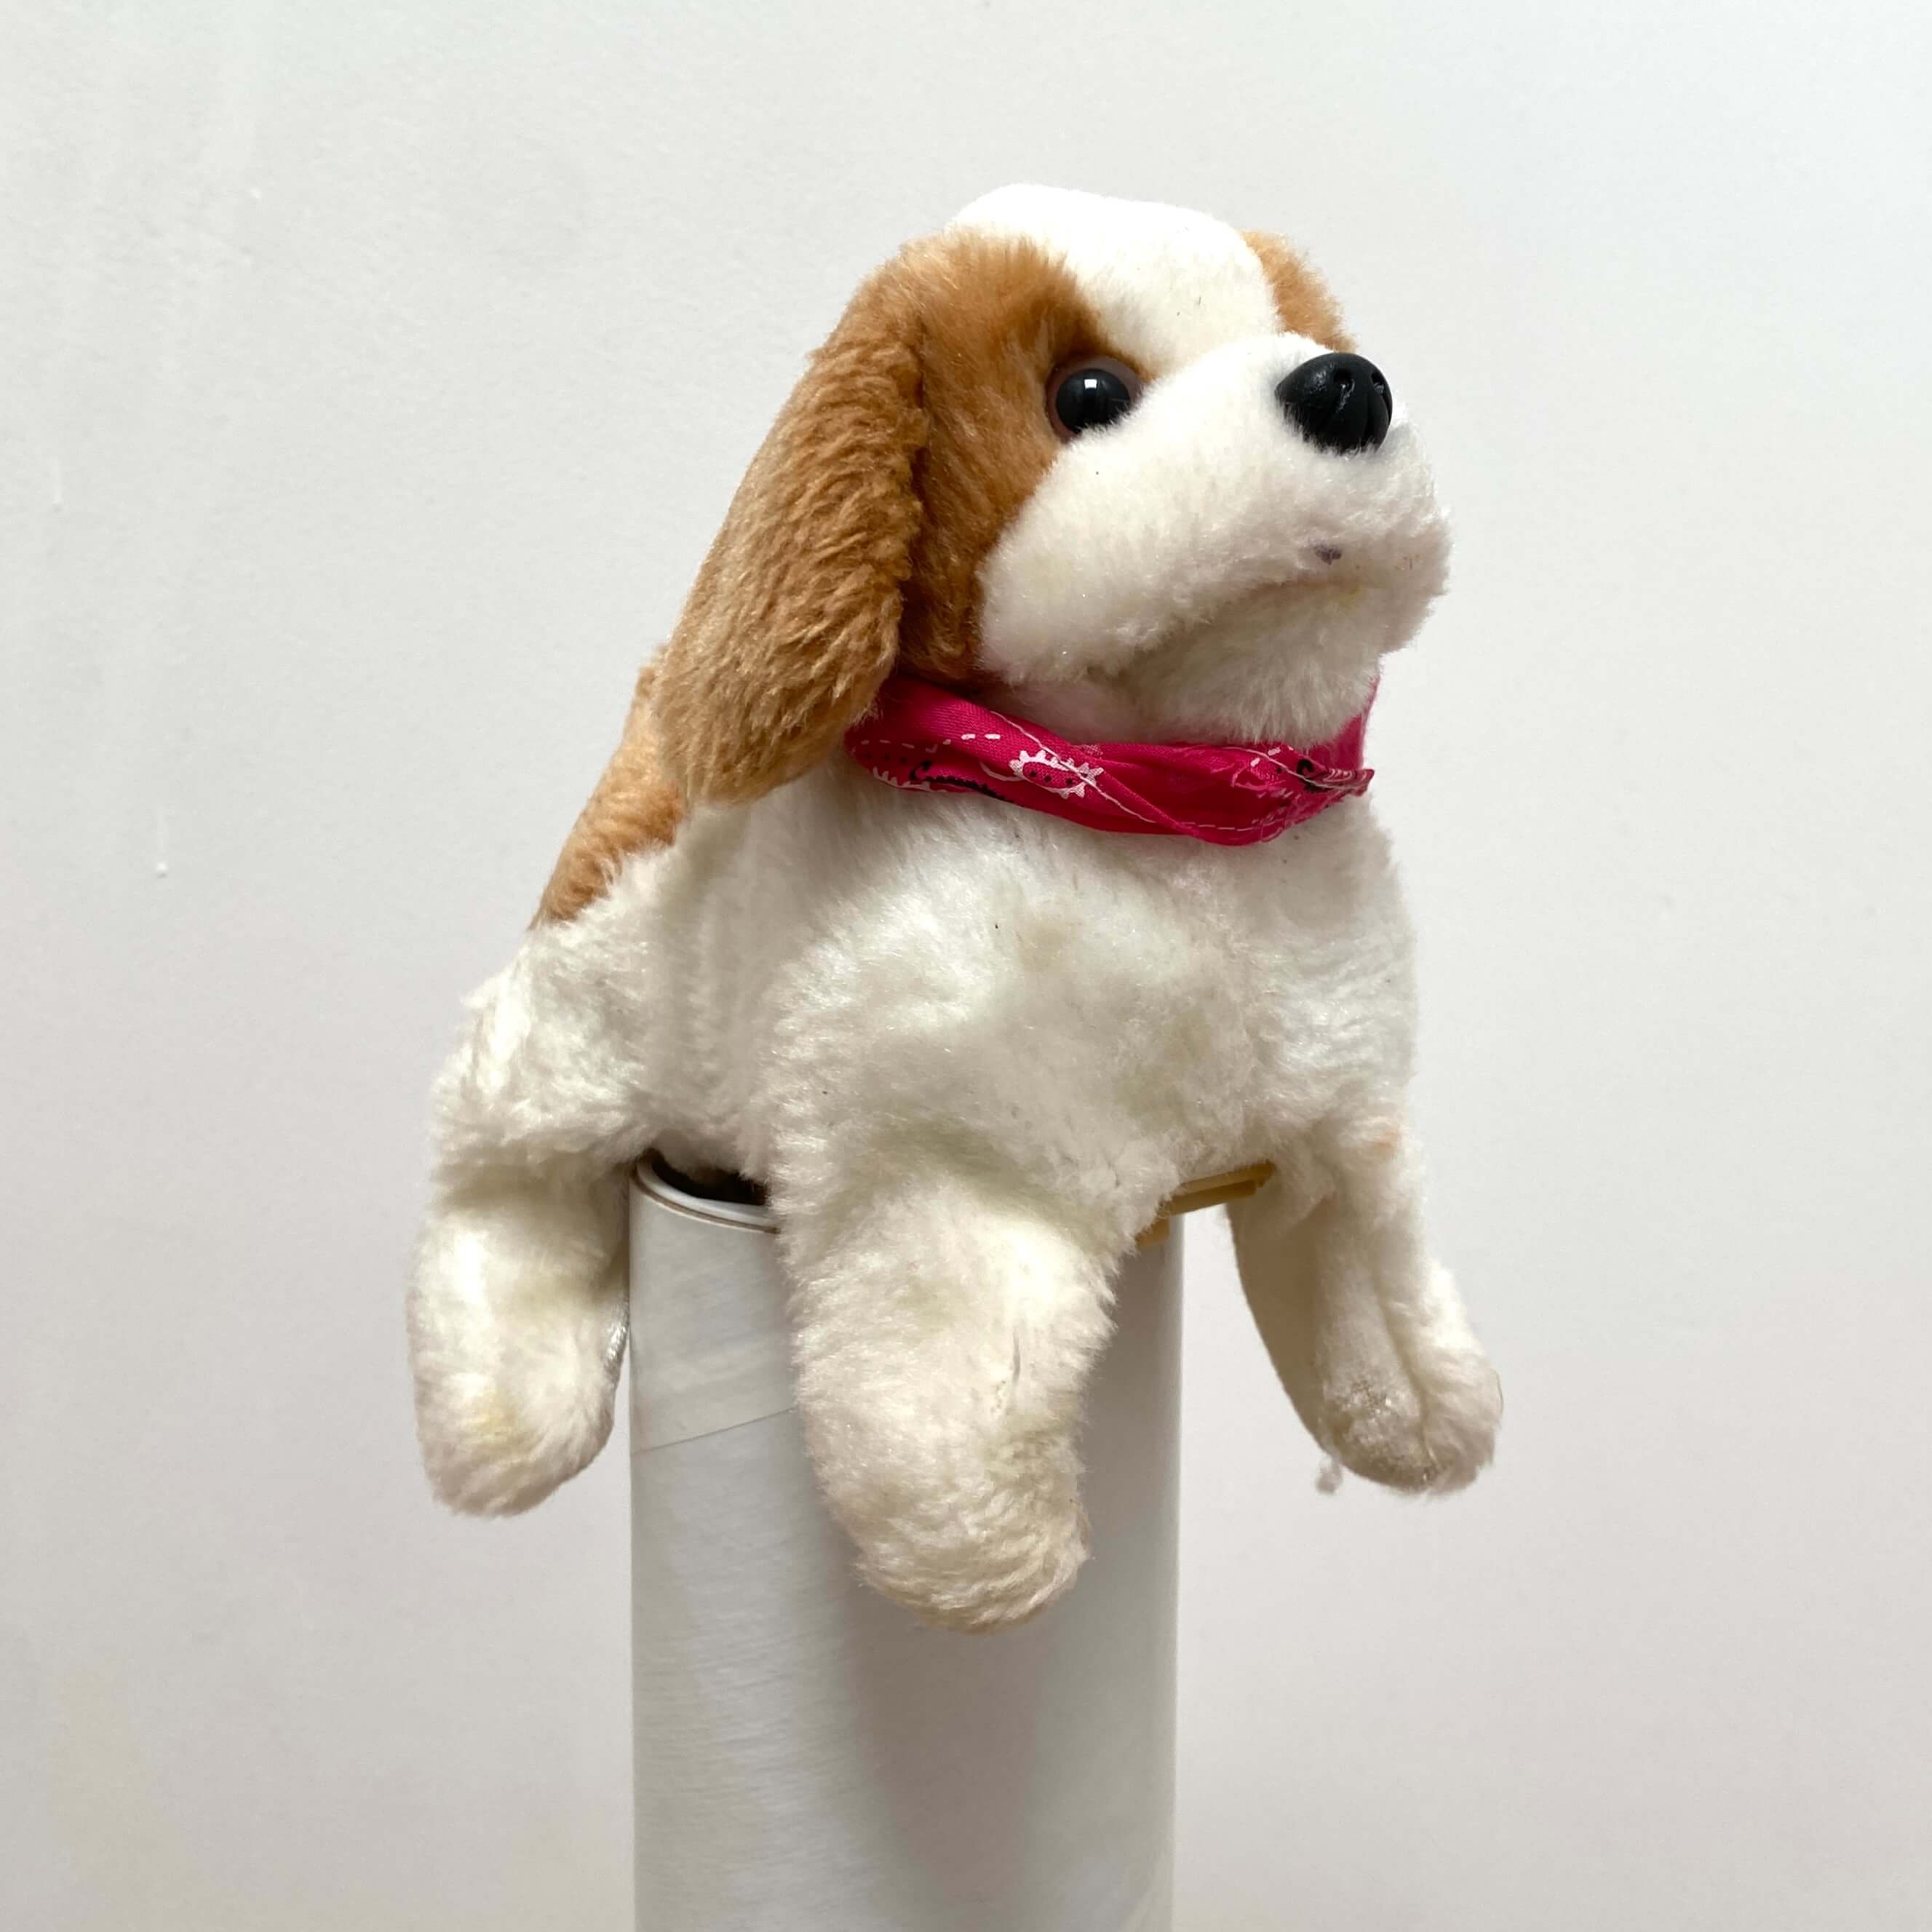 Puppy stuffed animal Toy